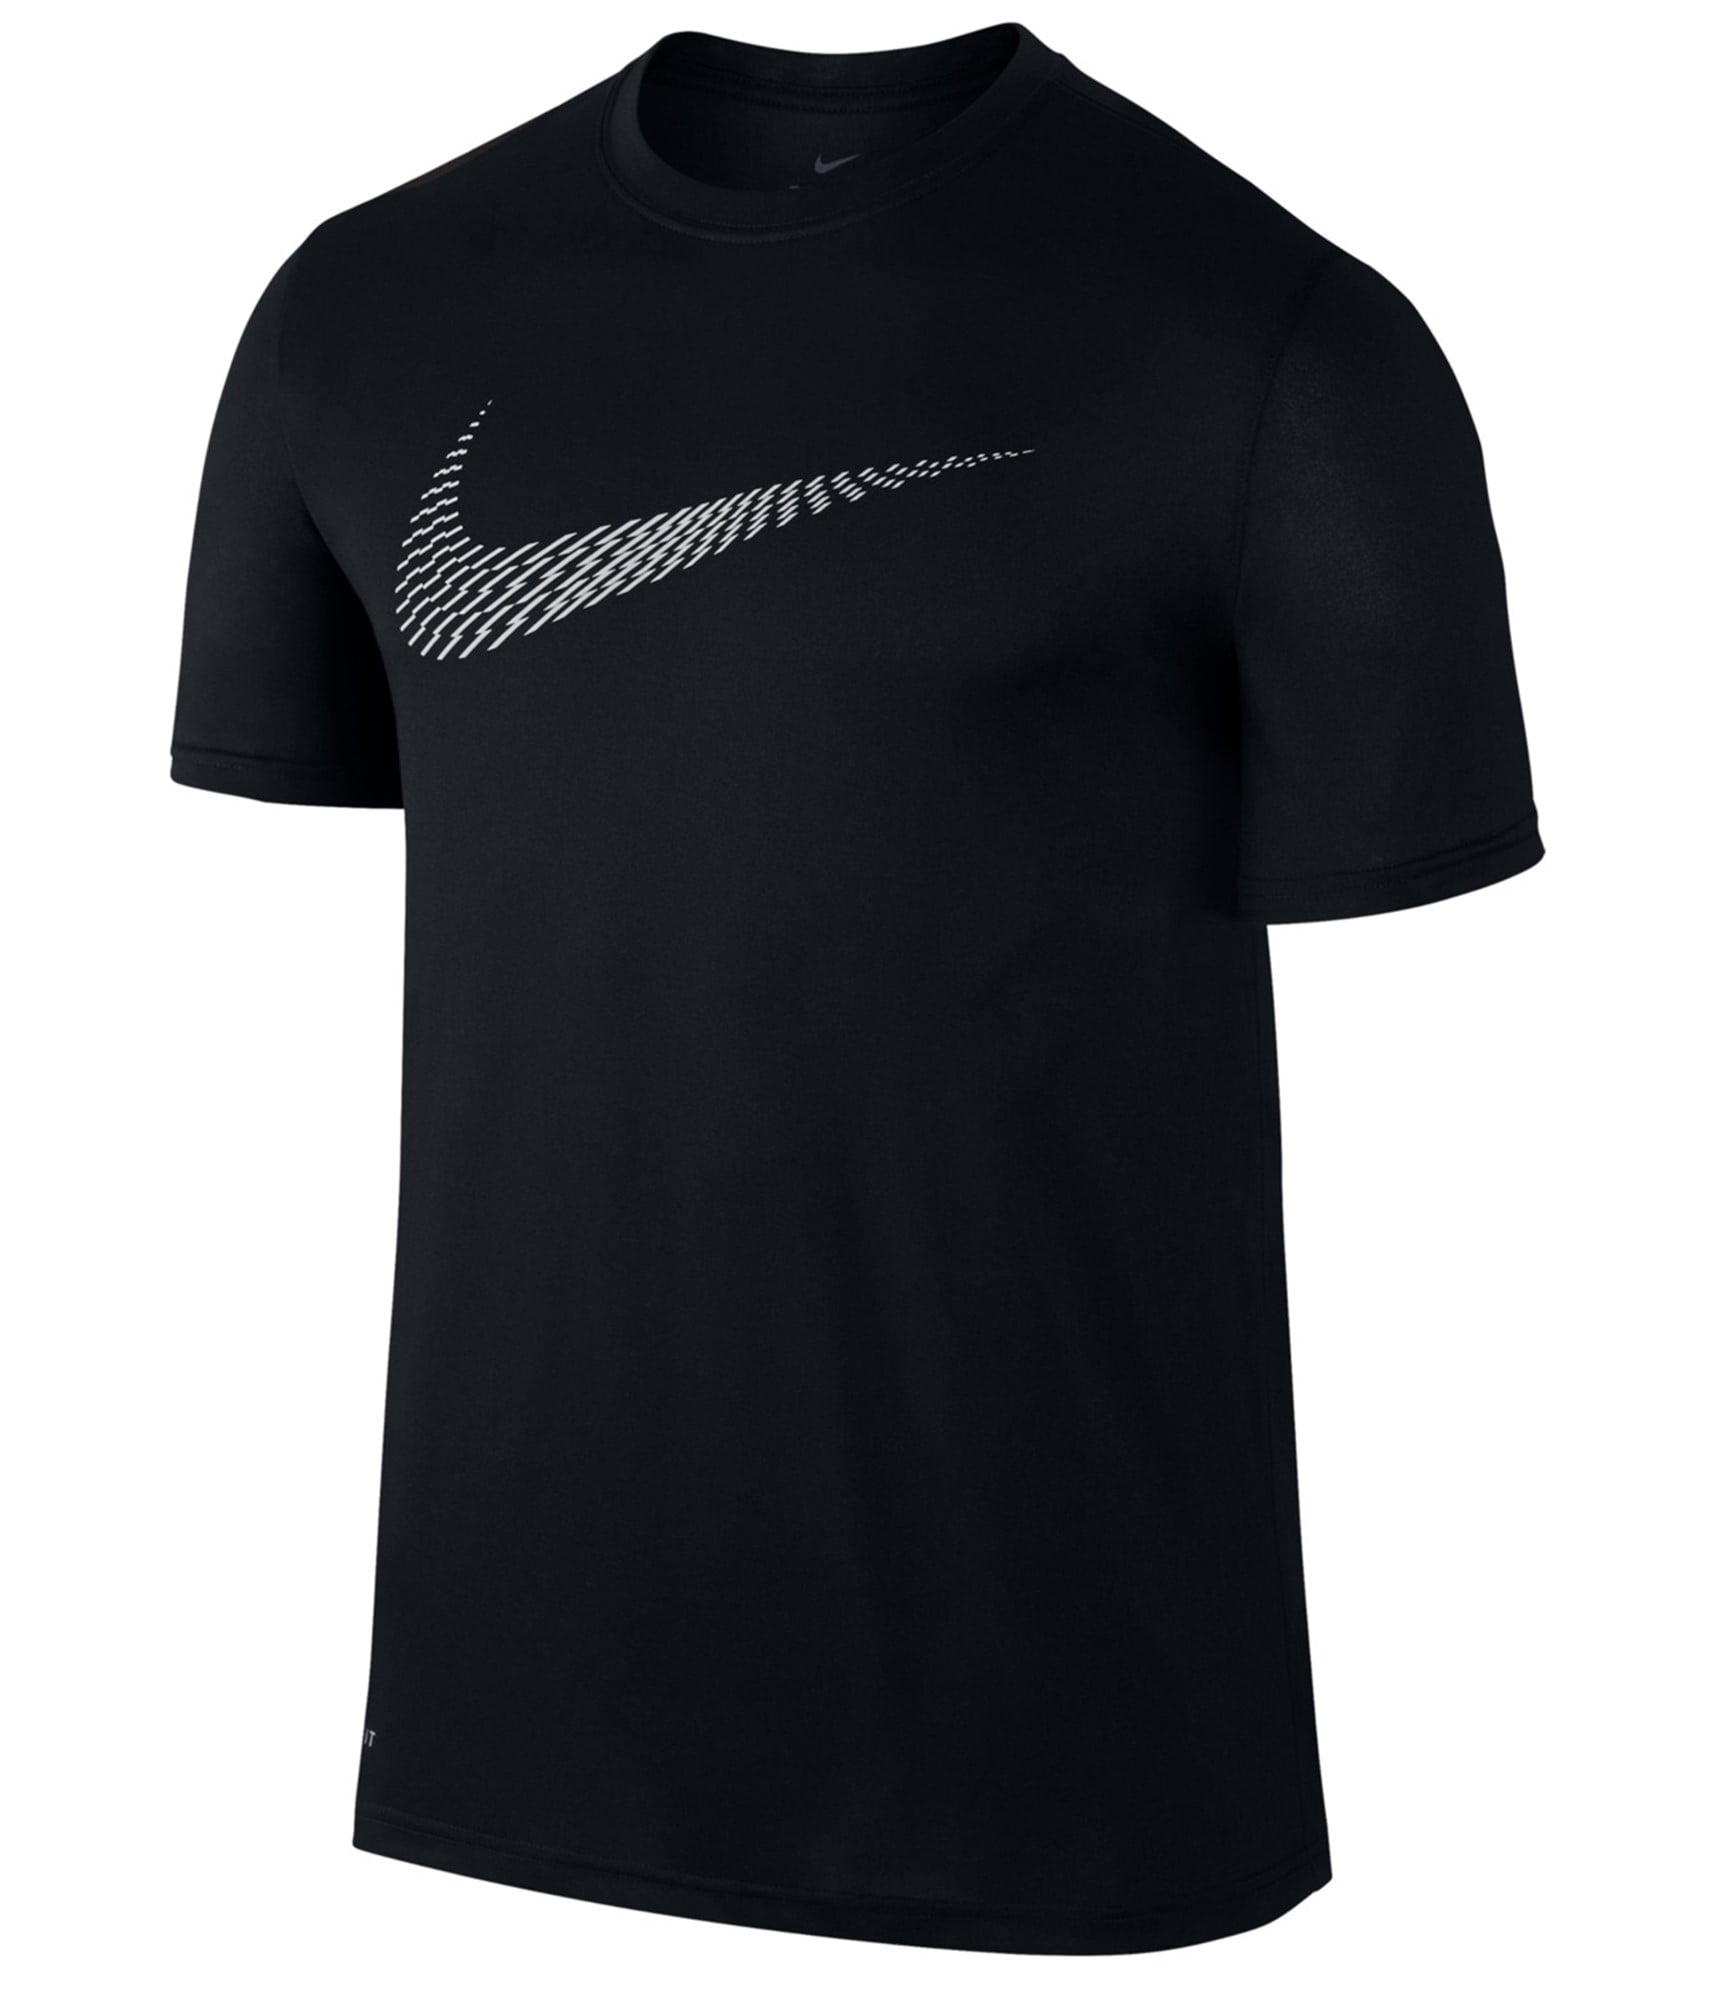 Nike - Nike Mens Logo Graphic T-Shirt, Black, X-Large - Walmart.com ...